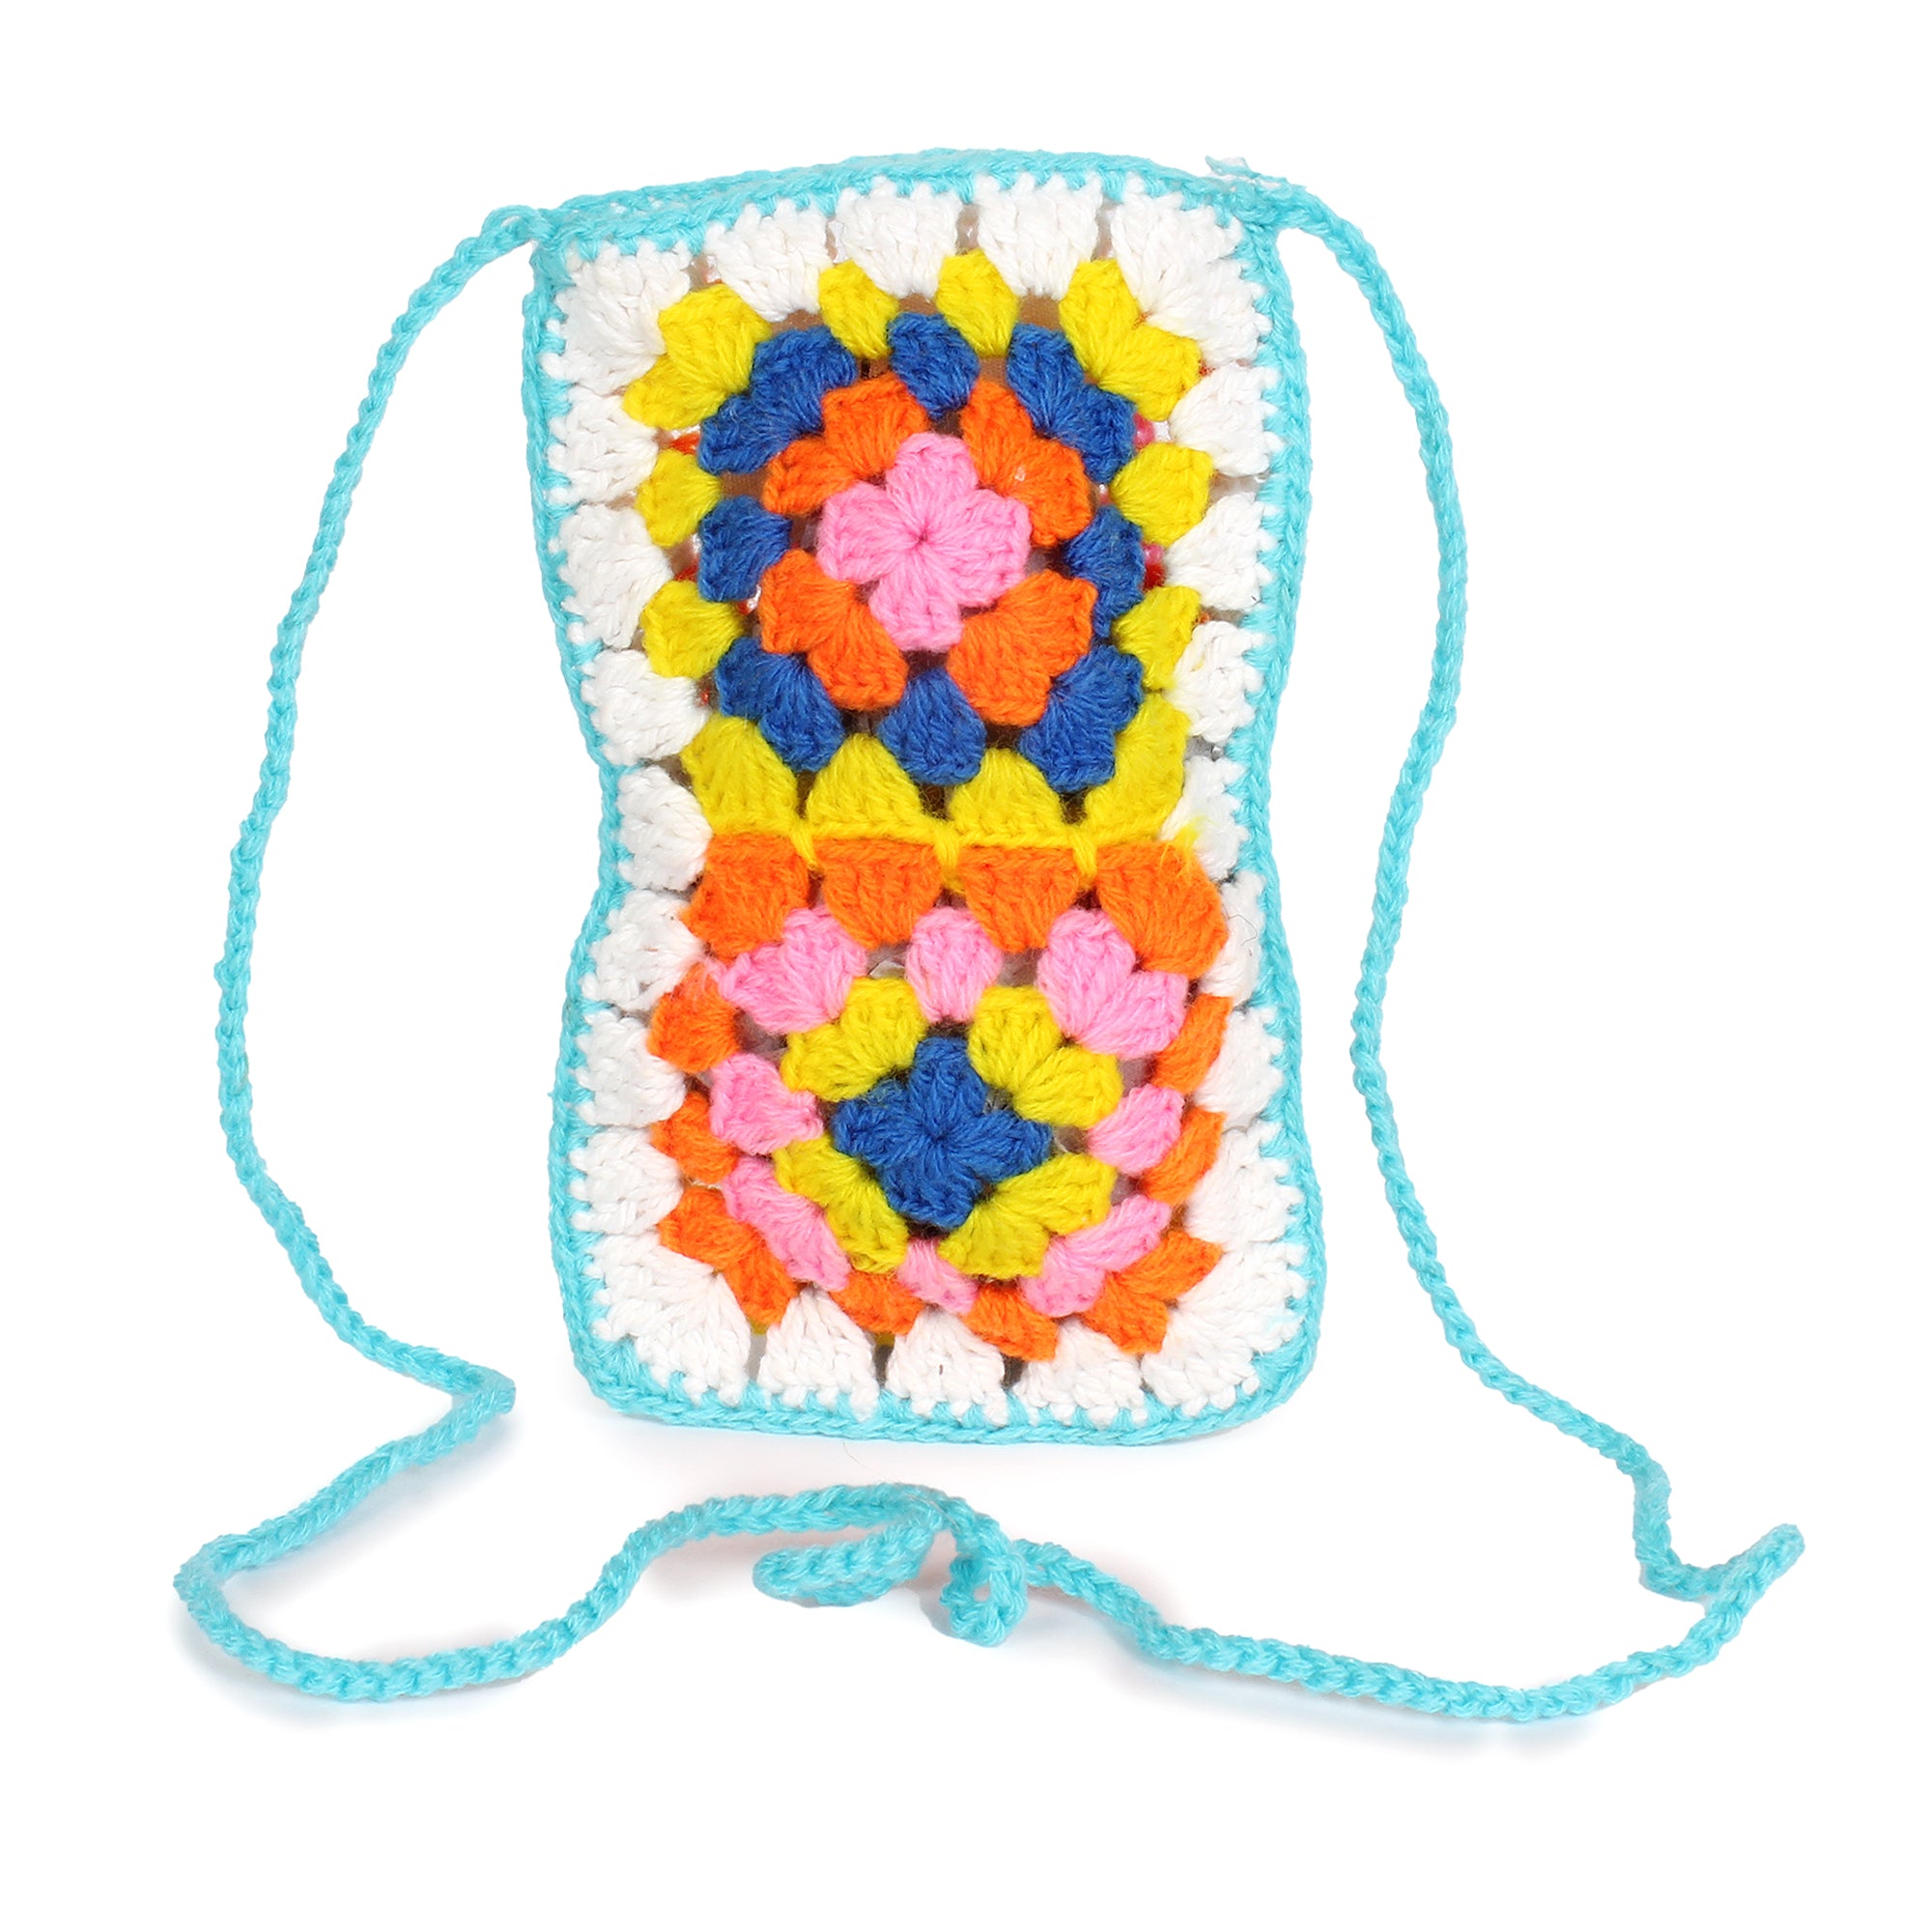 CALI Crochet Mobile Pouch